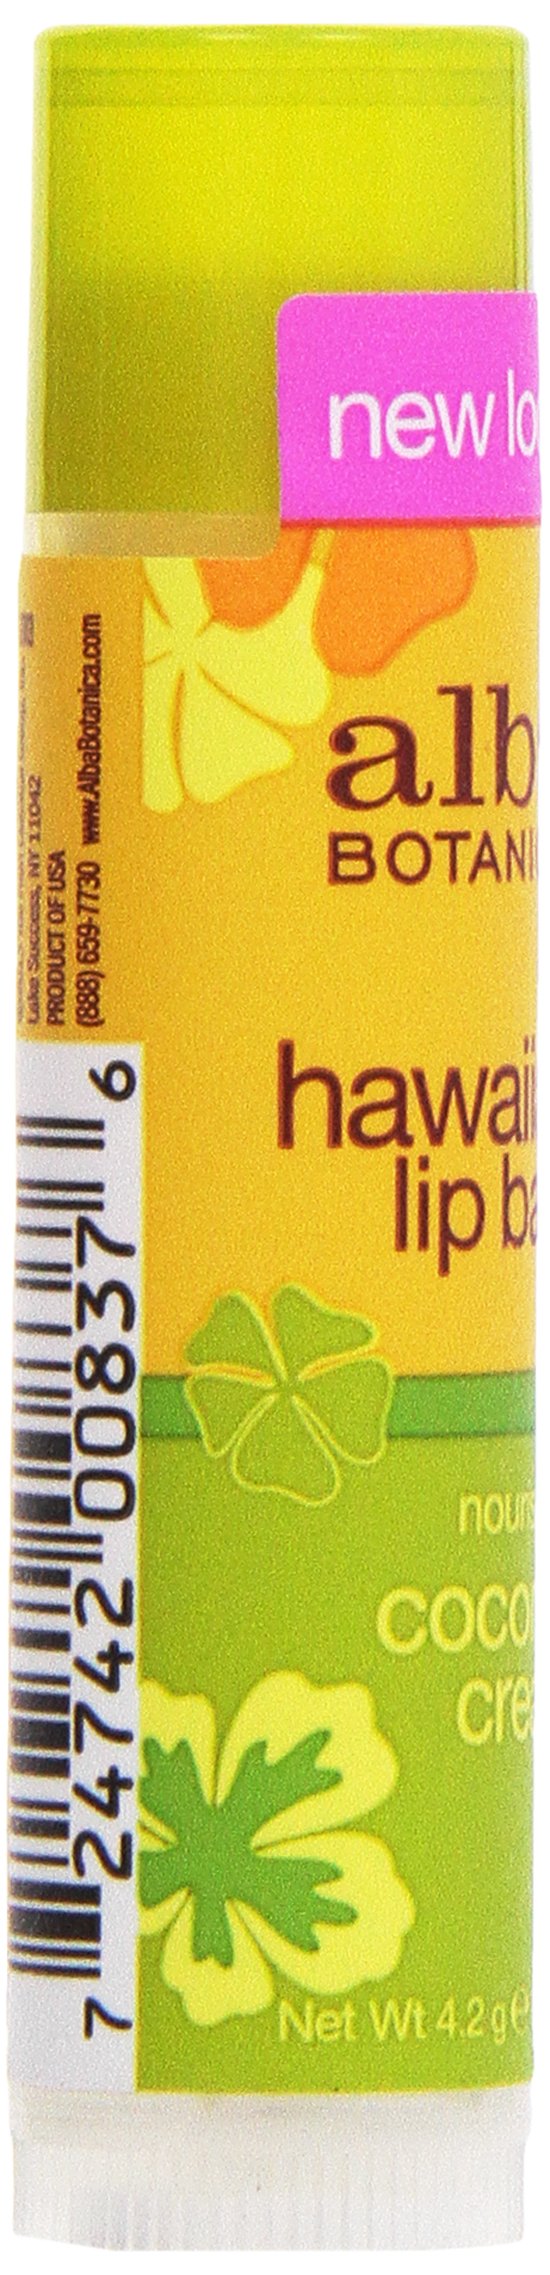 Alba Botanica Coconut Cream Lip Balm, 0.15 oz